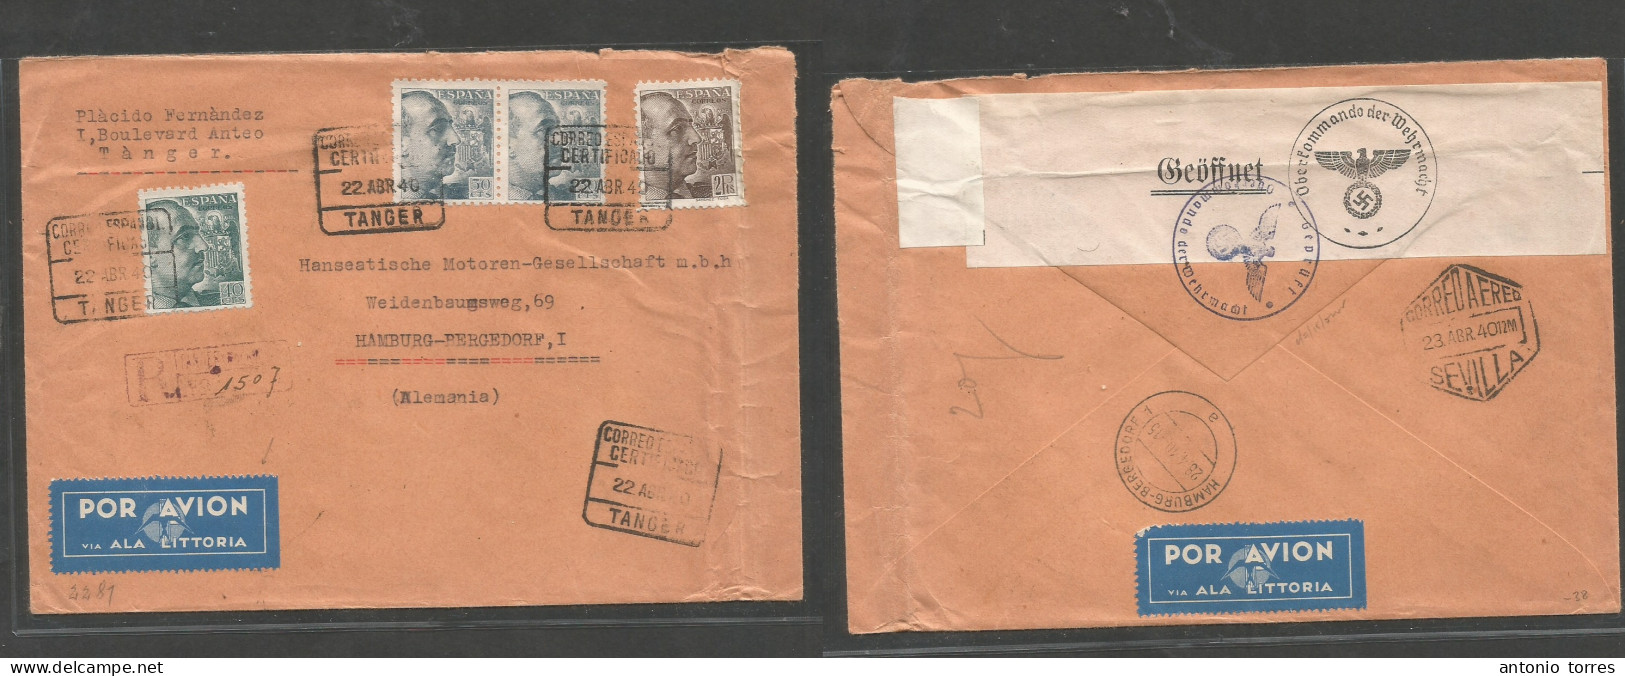 Marruecos. 1940 (22 April) Tanger, Oficina Española - Alemania, Hamburgo (28 April) Via Sevilla / Tablada Correo Aereo. - Marokko (1956-...)